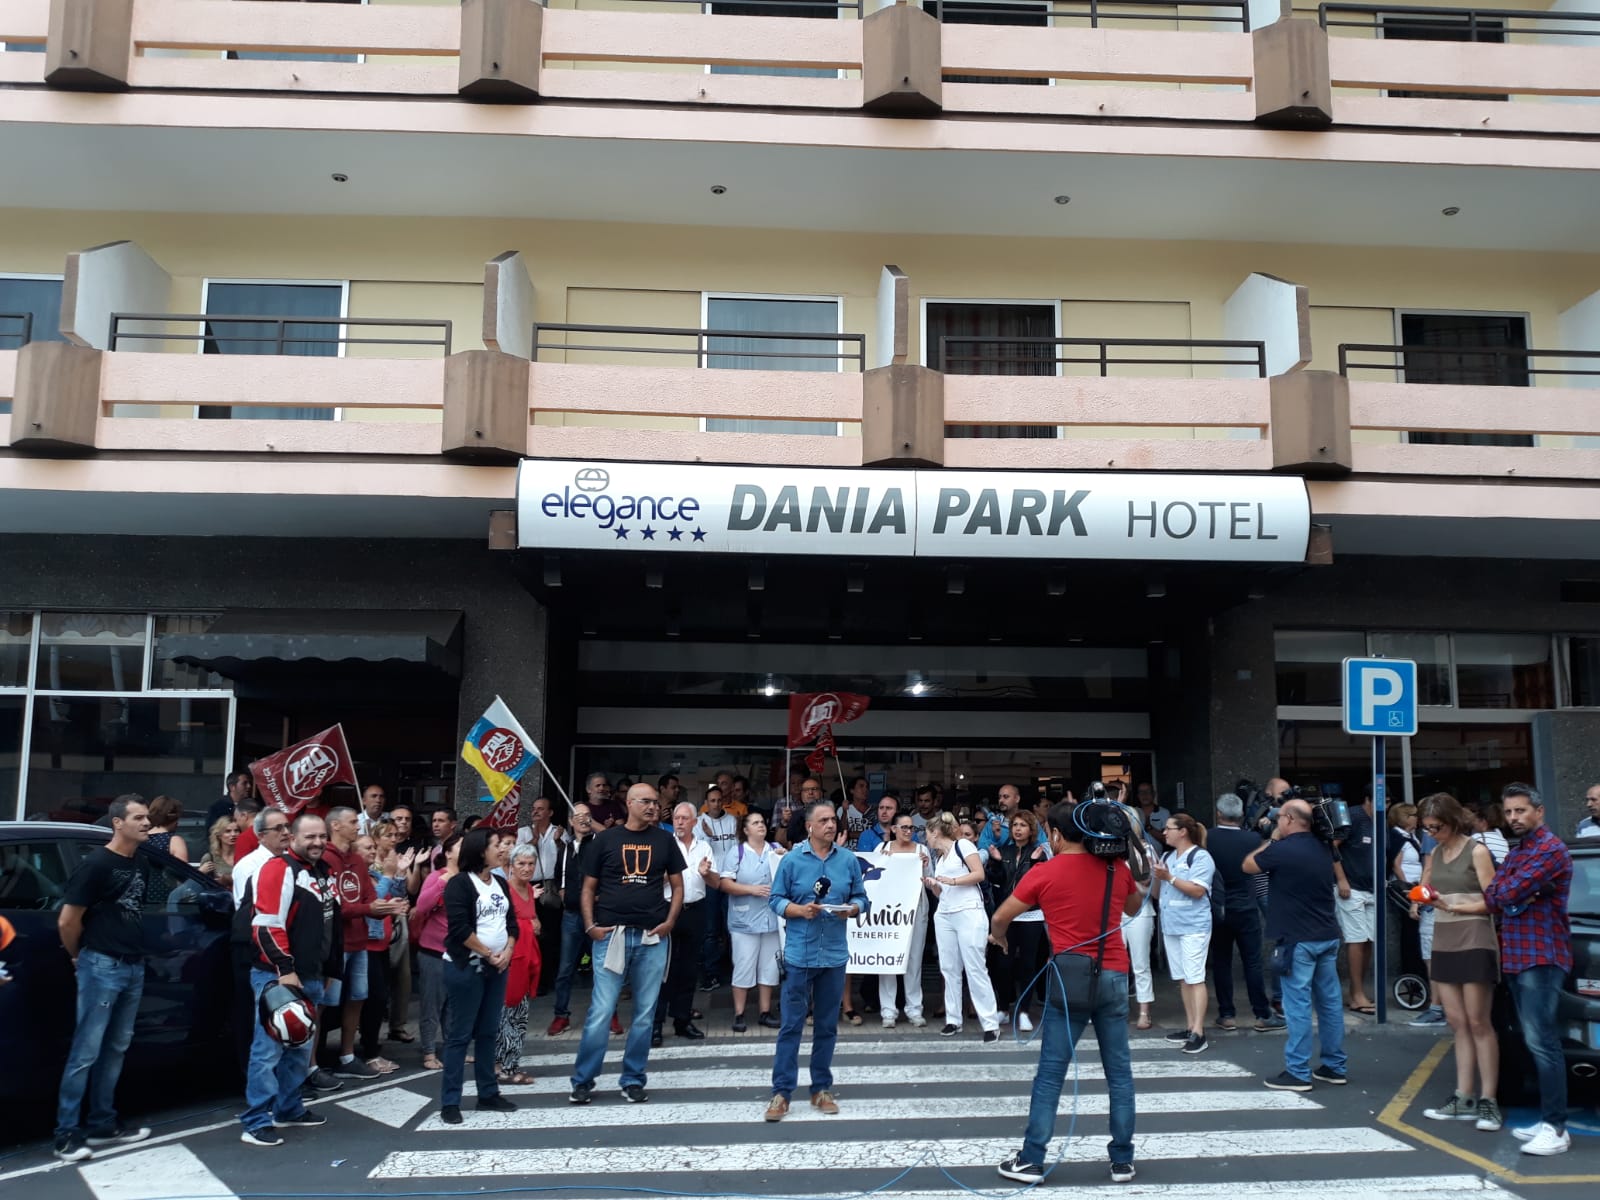 Hotel Dania Park spontan geschlossen – 54 Mitarbeiter arbeitslos